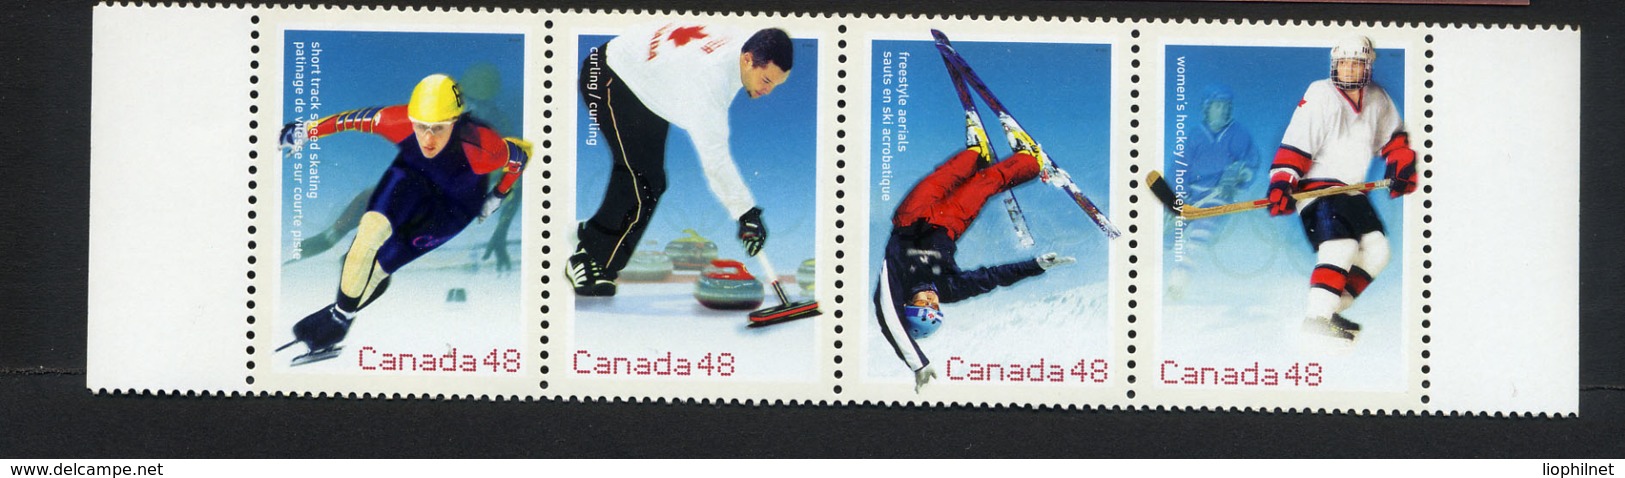 CANADA 2002, Patinage De Vitesse, Curling, Hockey, Ski Acrobatique, 4 Valeurs, Neufs / Mint. R1528 - Invierno 2002: Salt Lake City